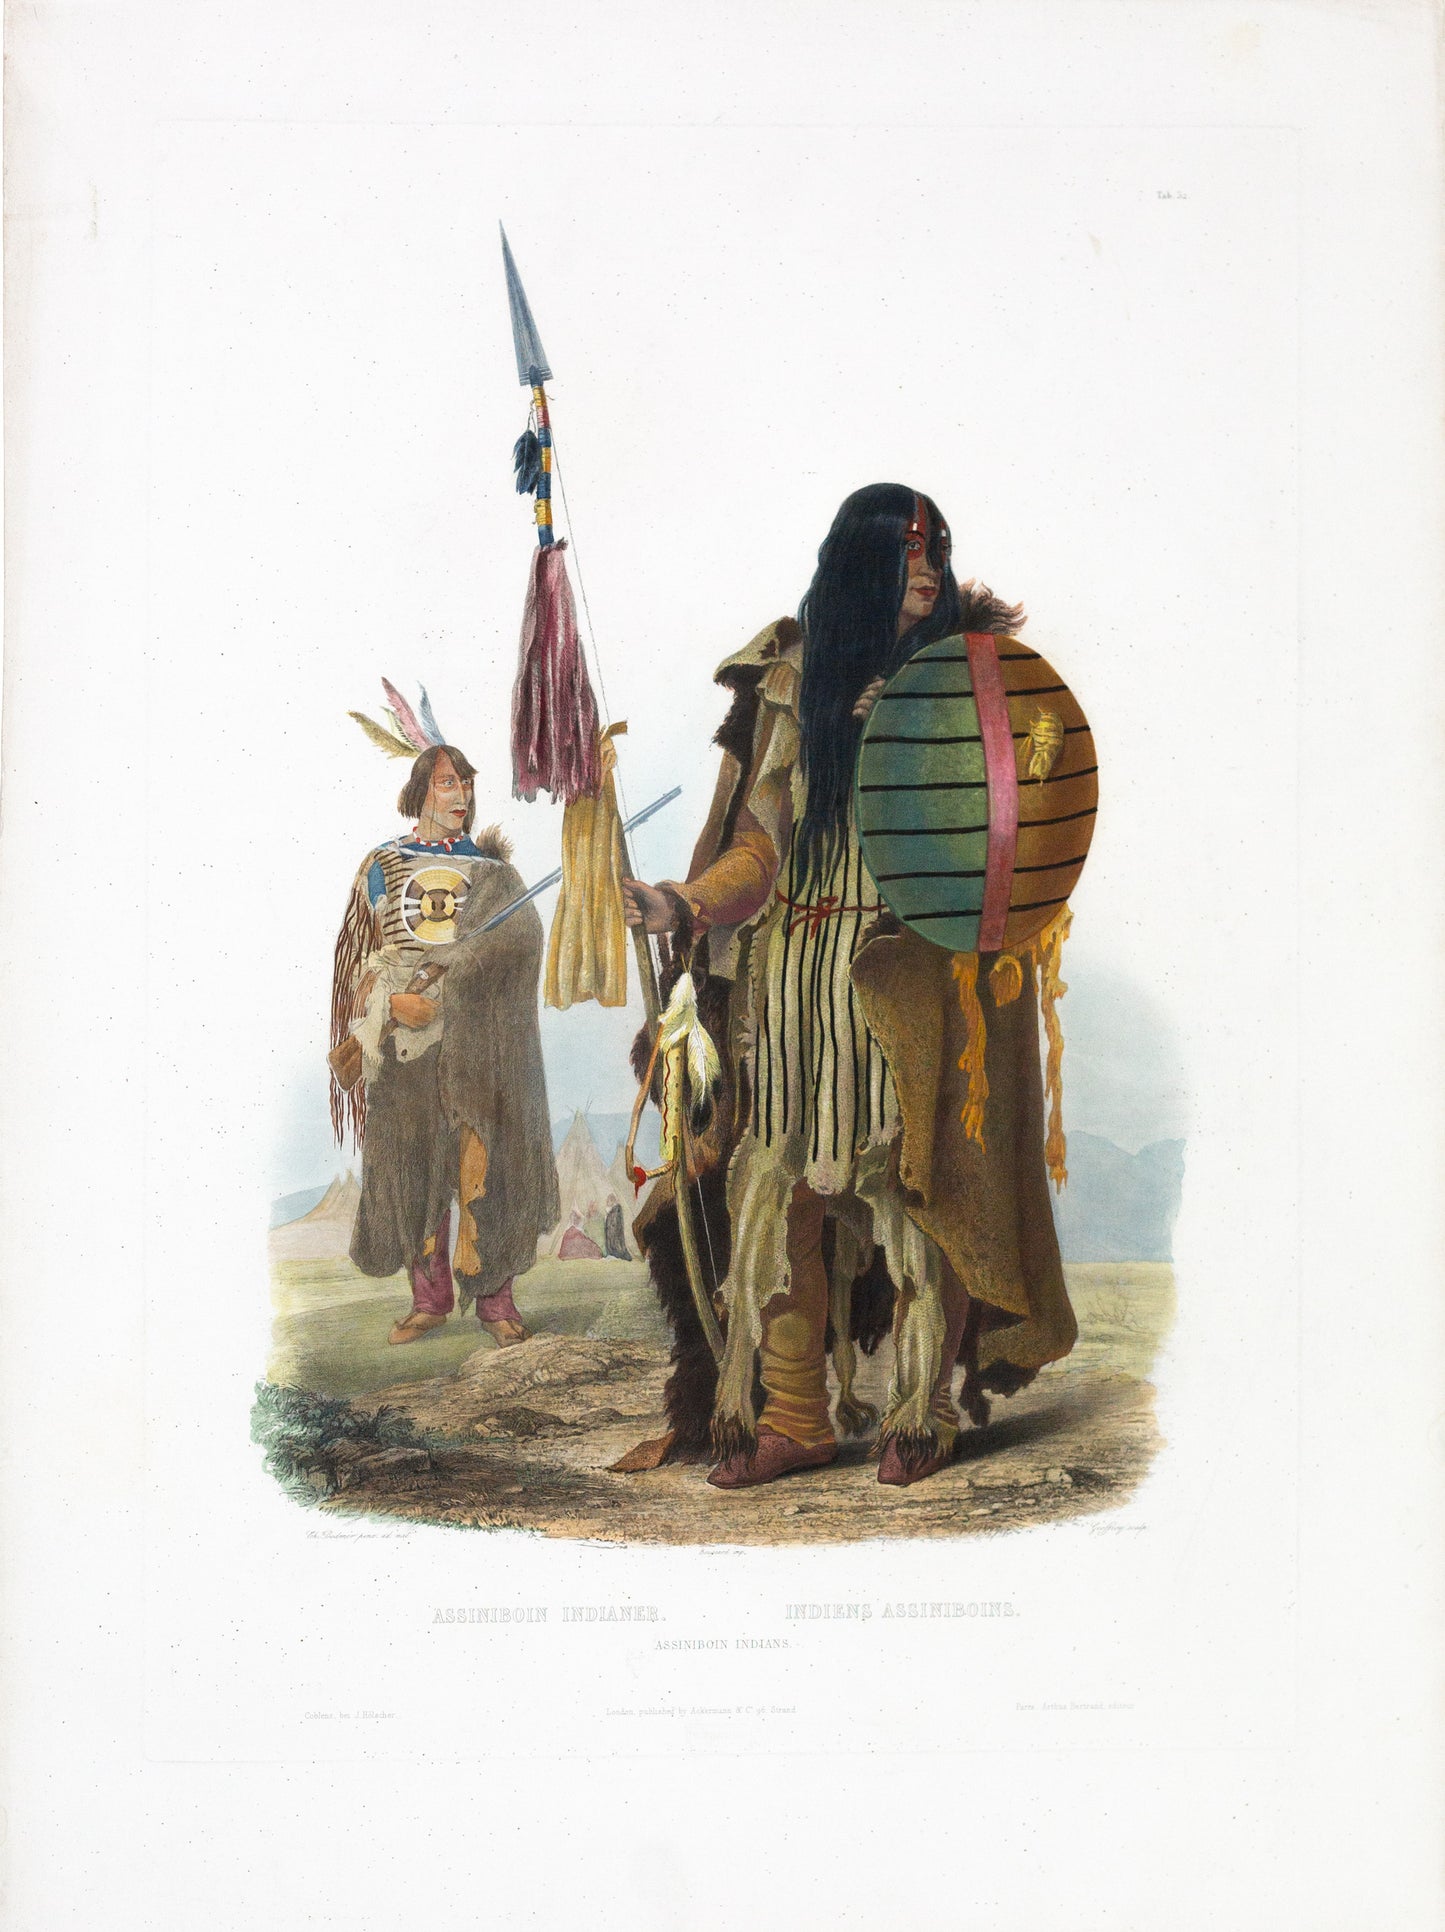 Karl Bodmer (1809-1893), Tab. 32, Assiniboin Indians